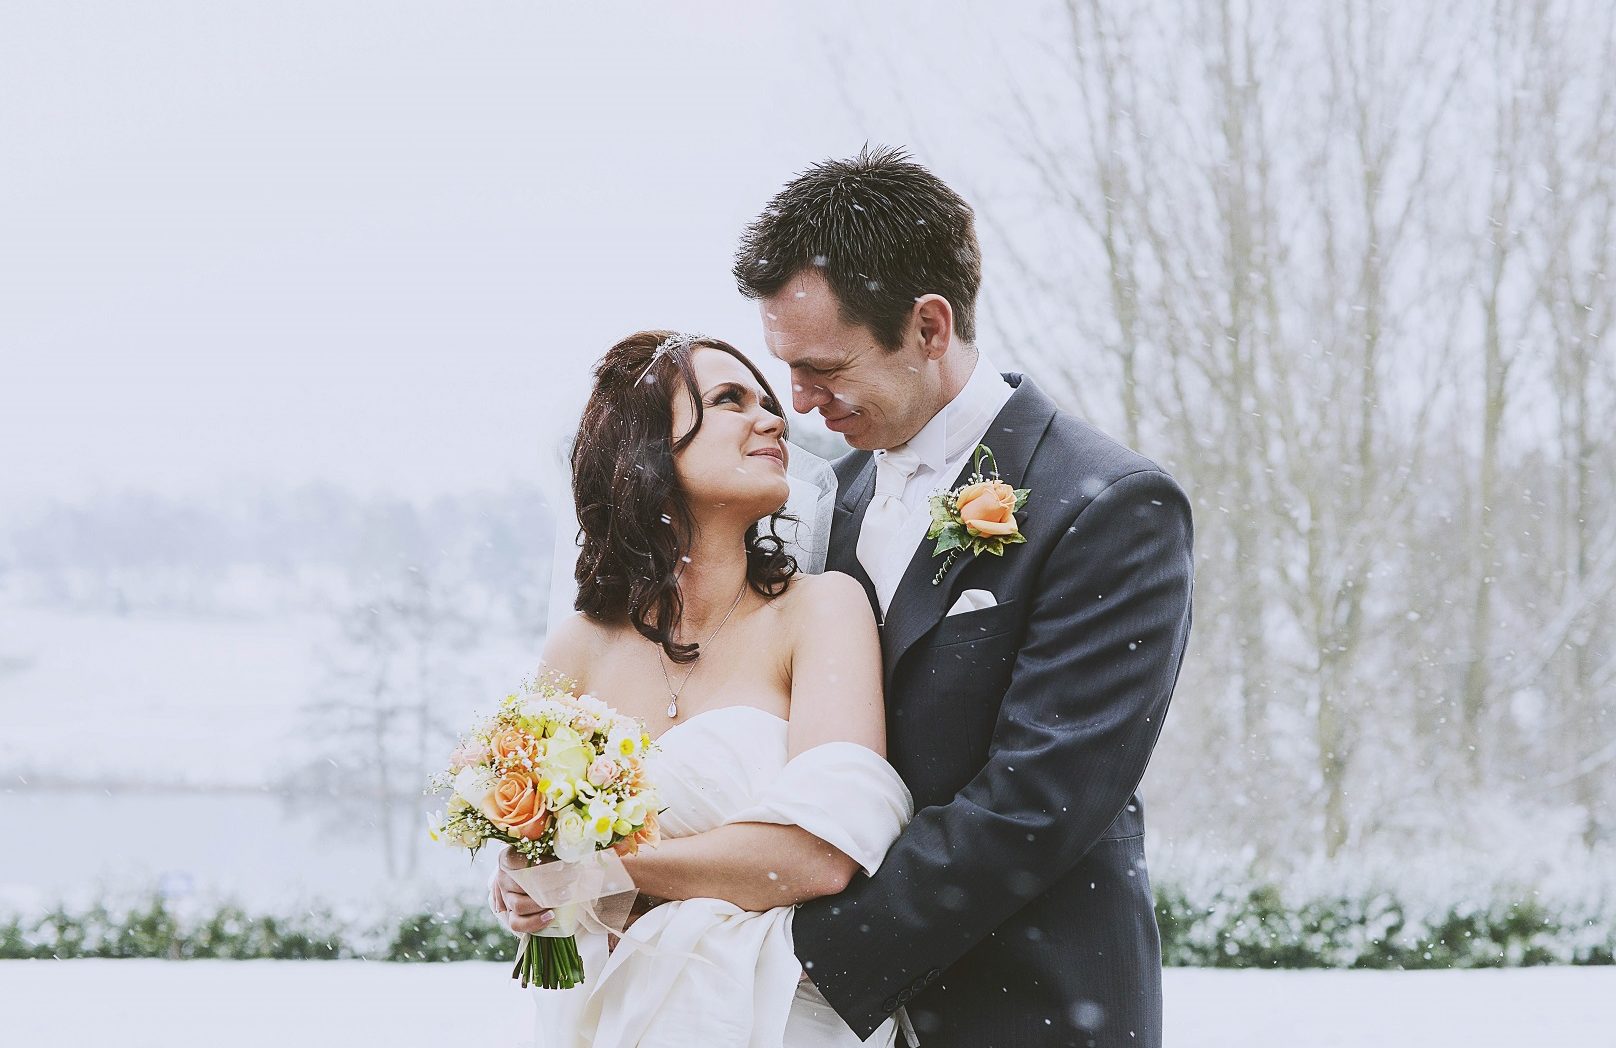 A couple enjoying the magic of a winter wedding